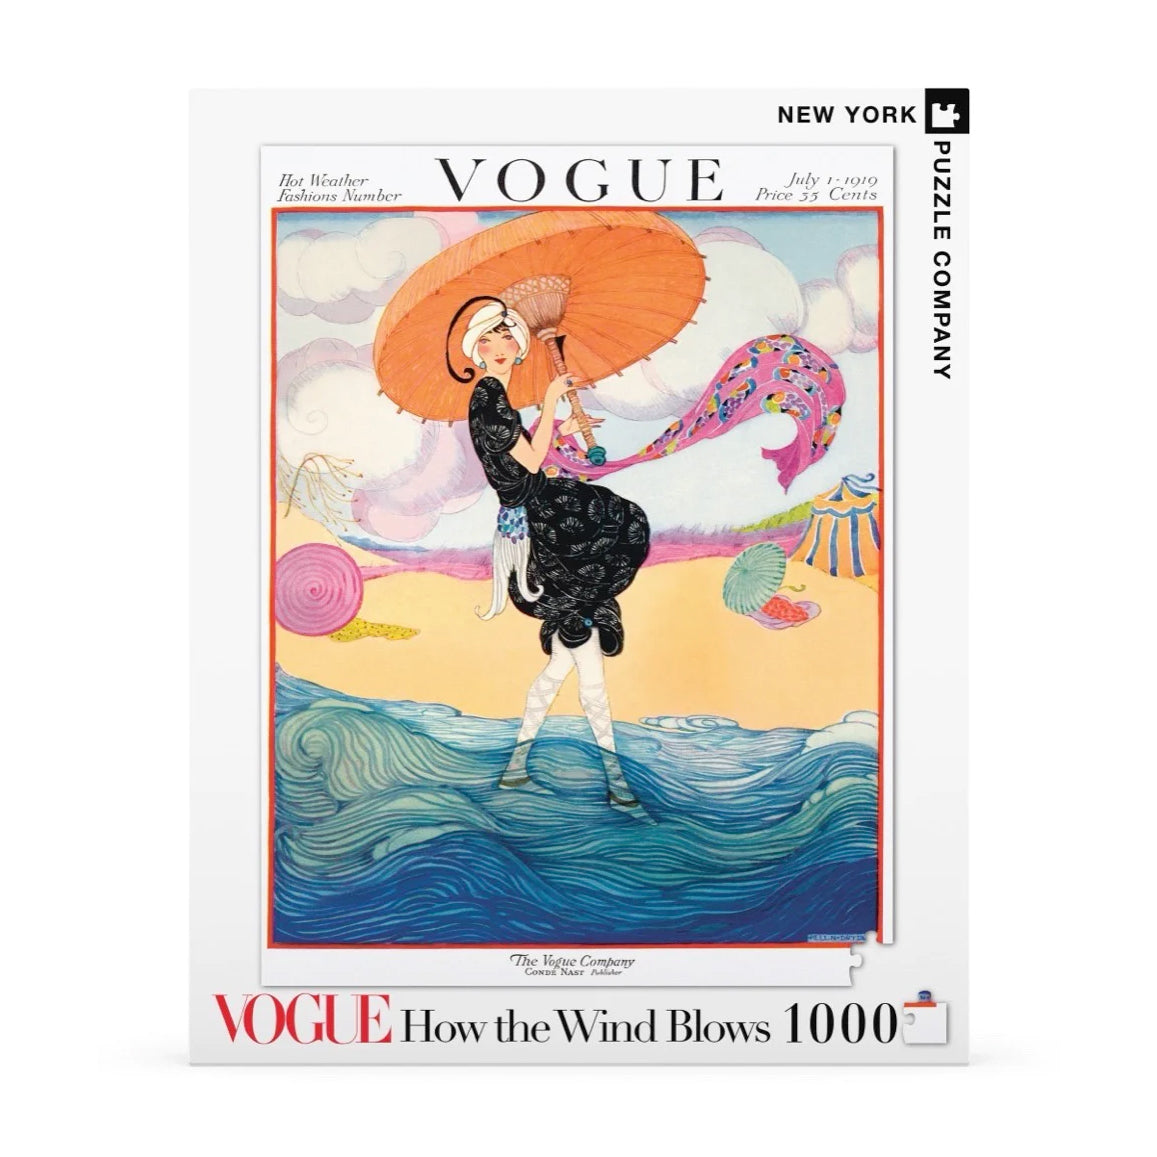 Puzzel Vogue How the Wind Blows│New York Puzzle Compane 1000 stukjes│art. NPZVG1815│voorkant verpakking